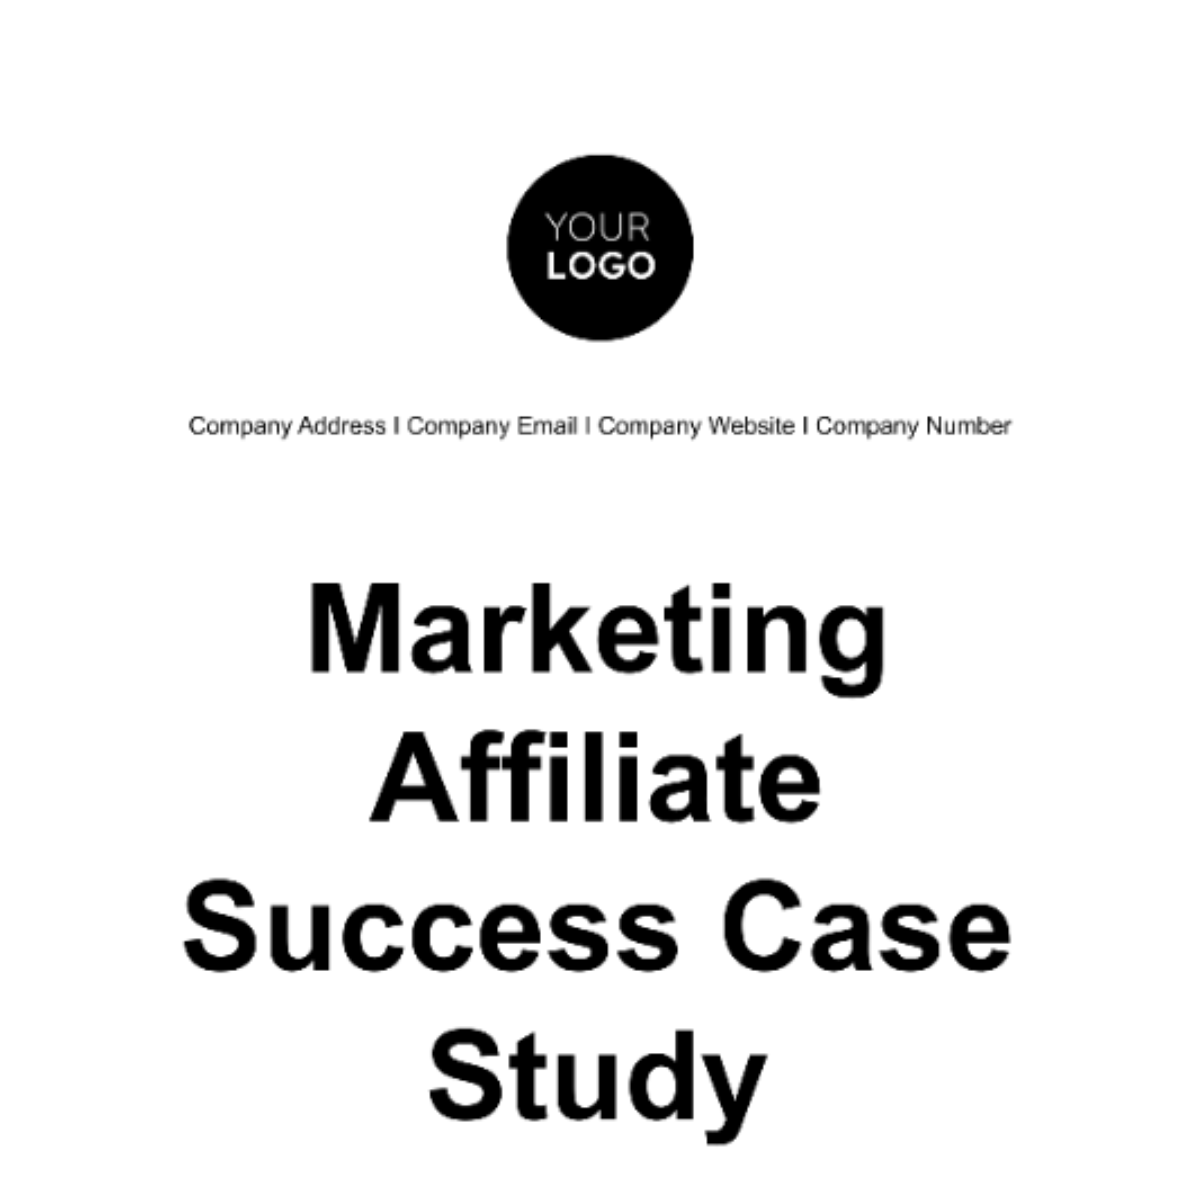 Marketing Affiliate Success Case Study Template